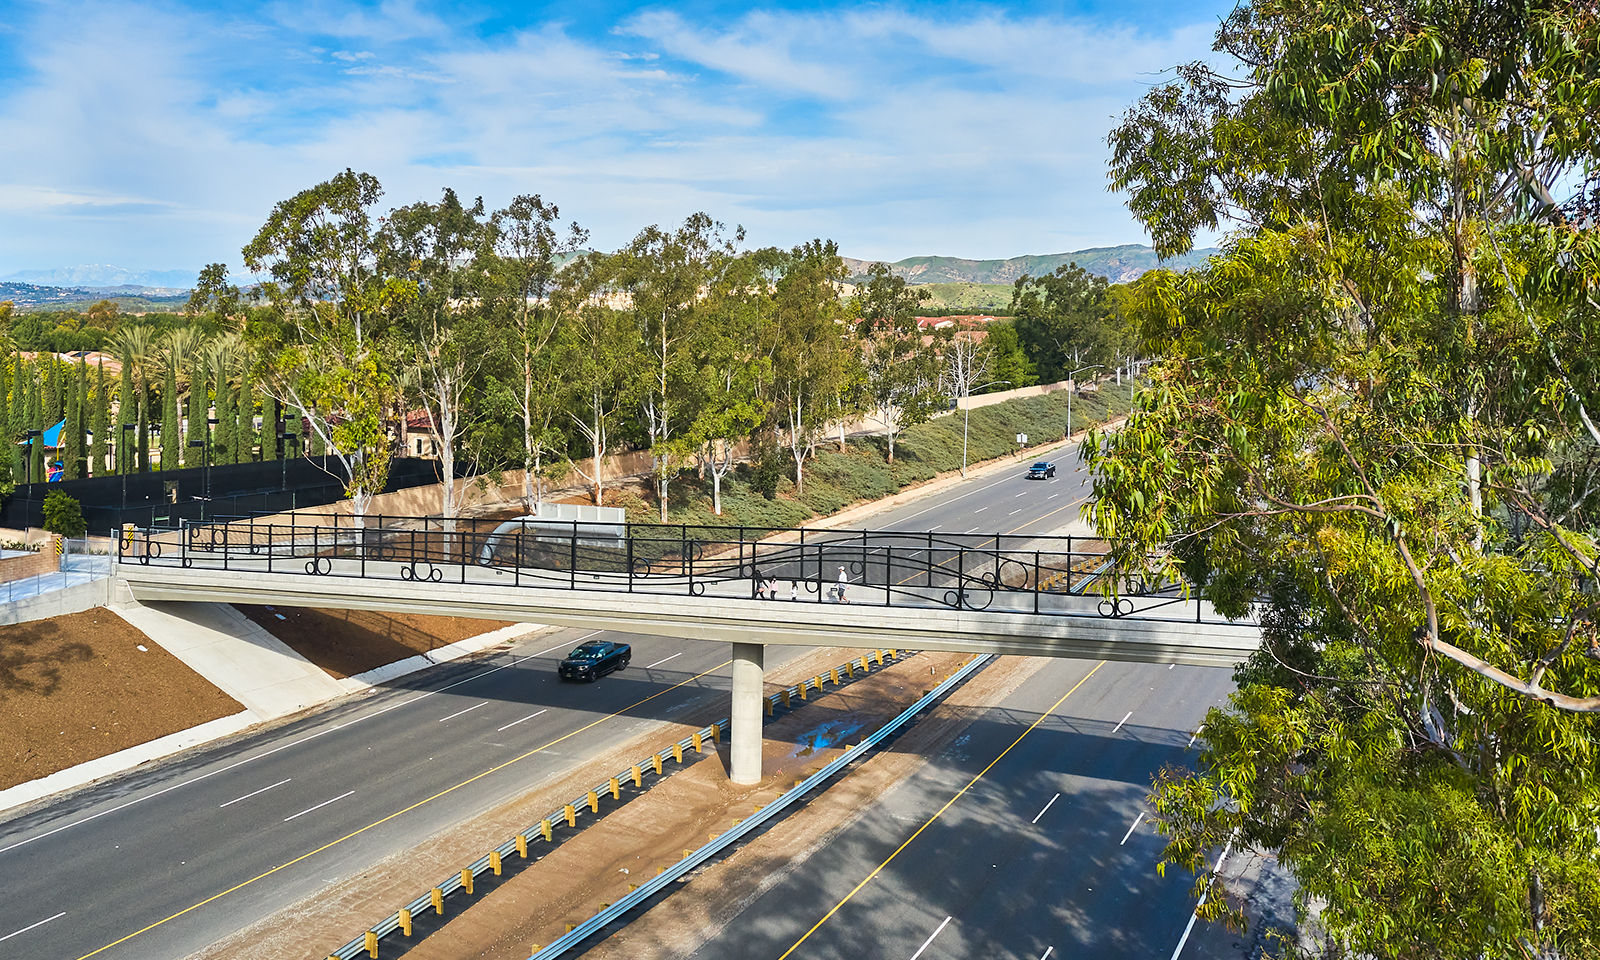 New pedestrian bridge opens key link in 363-mile network